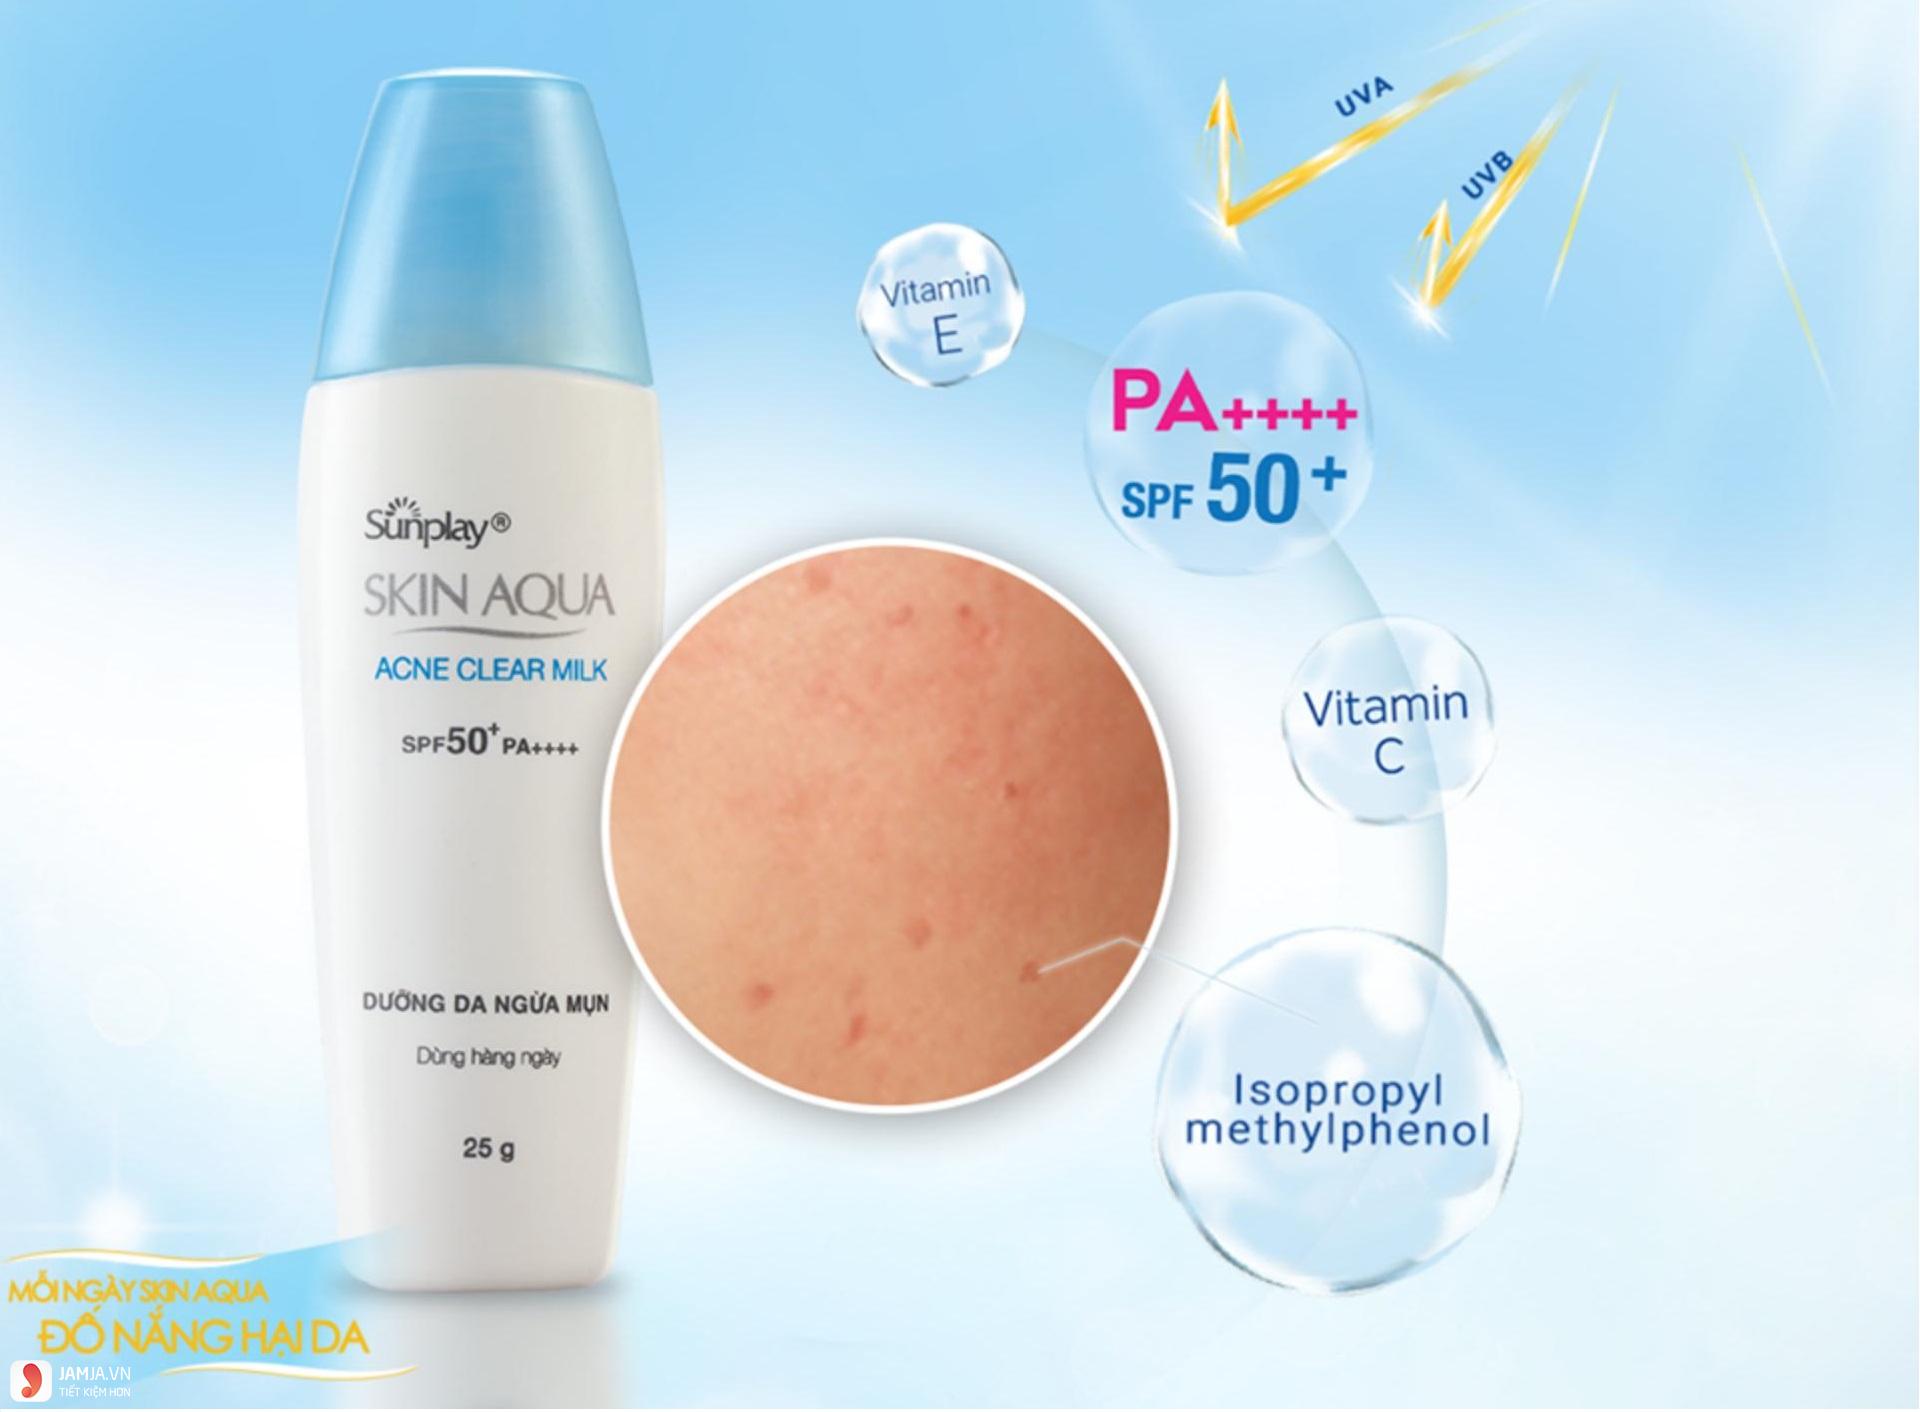  Kem chống nắng  Skin Aqua Acne Clear Milk 